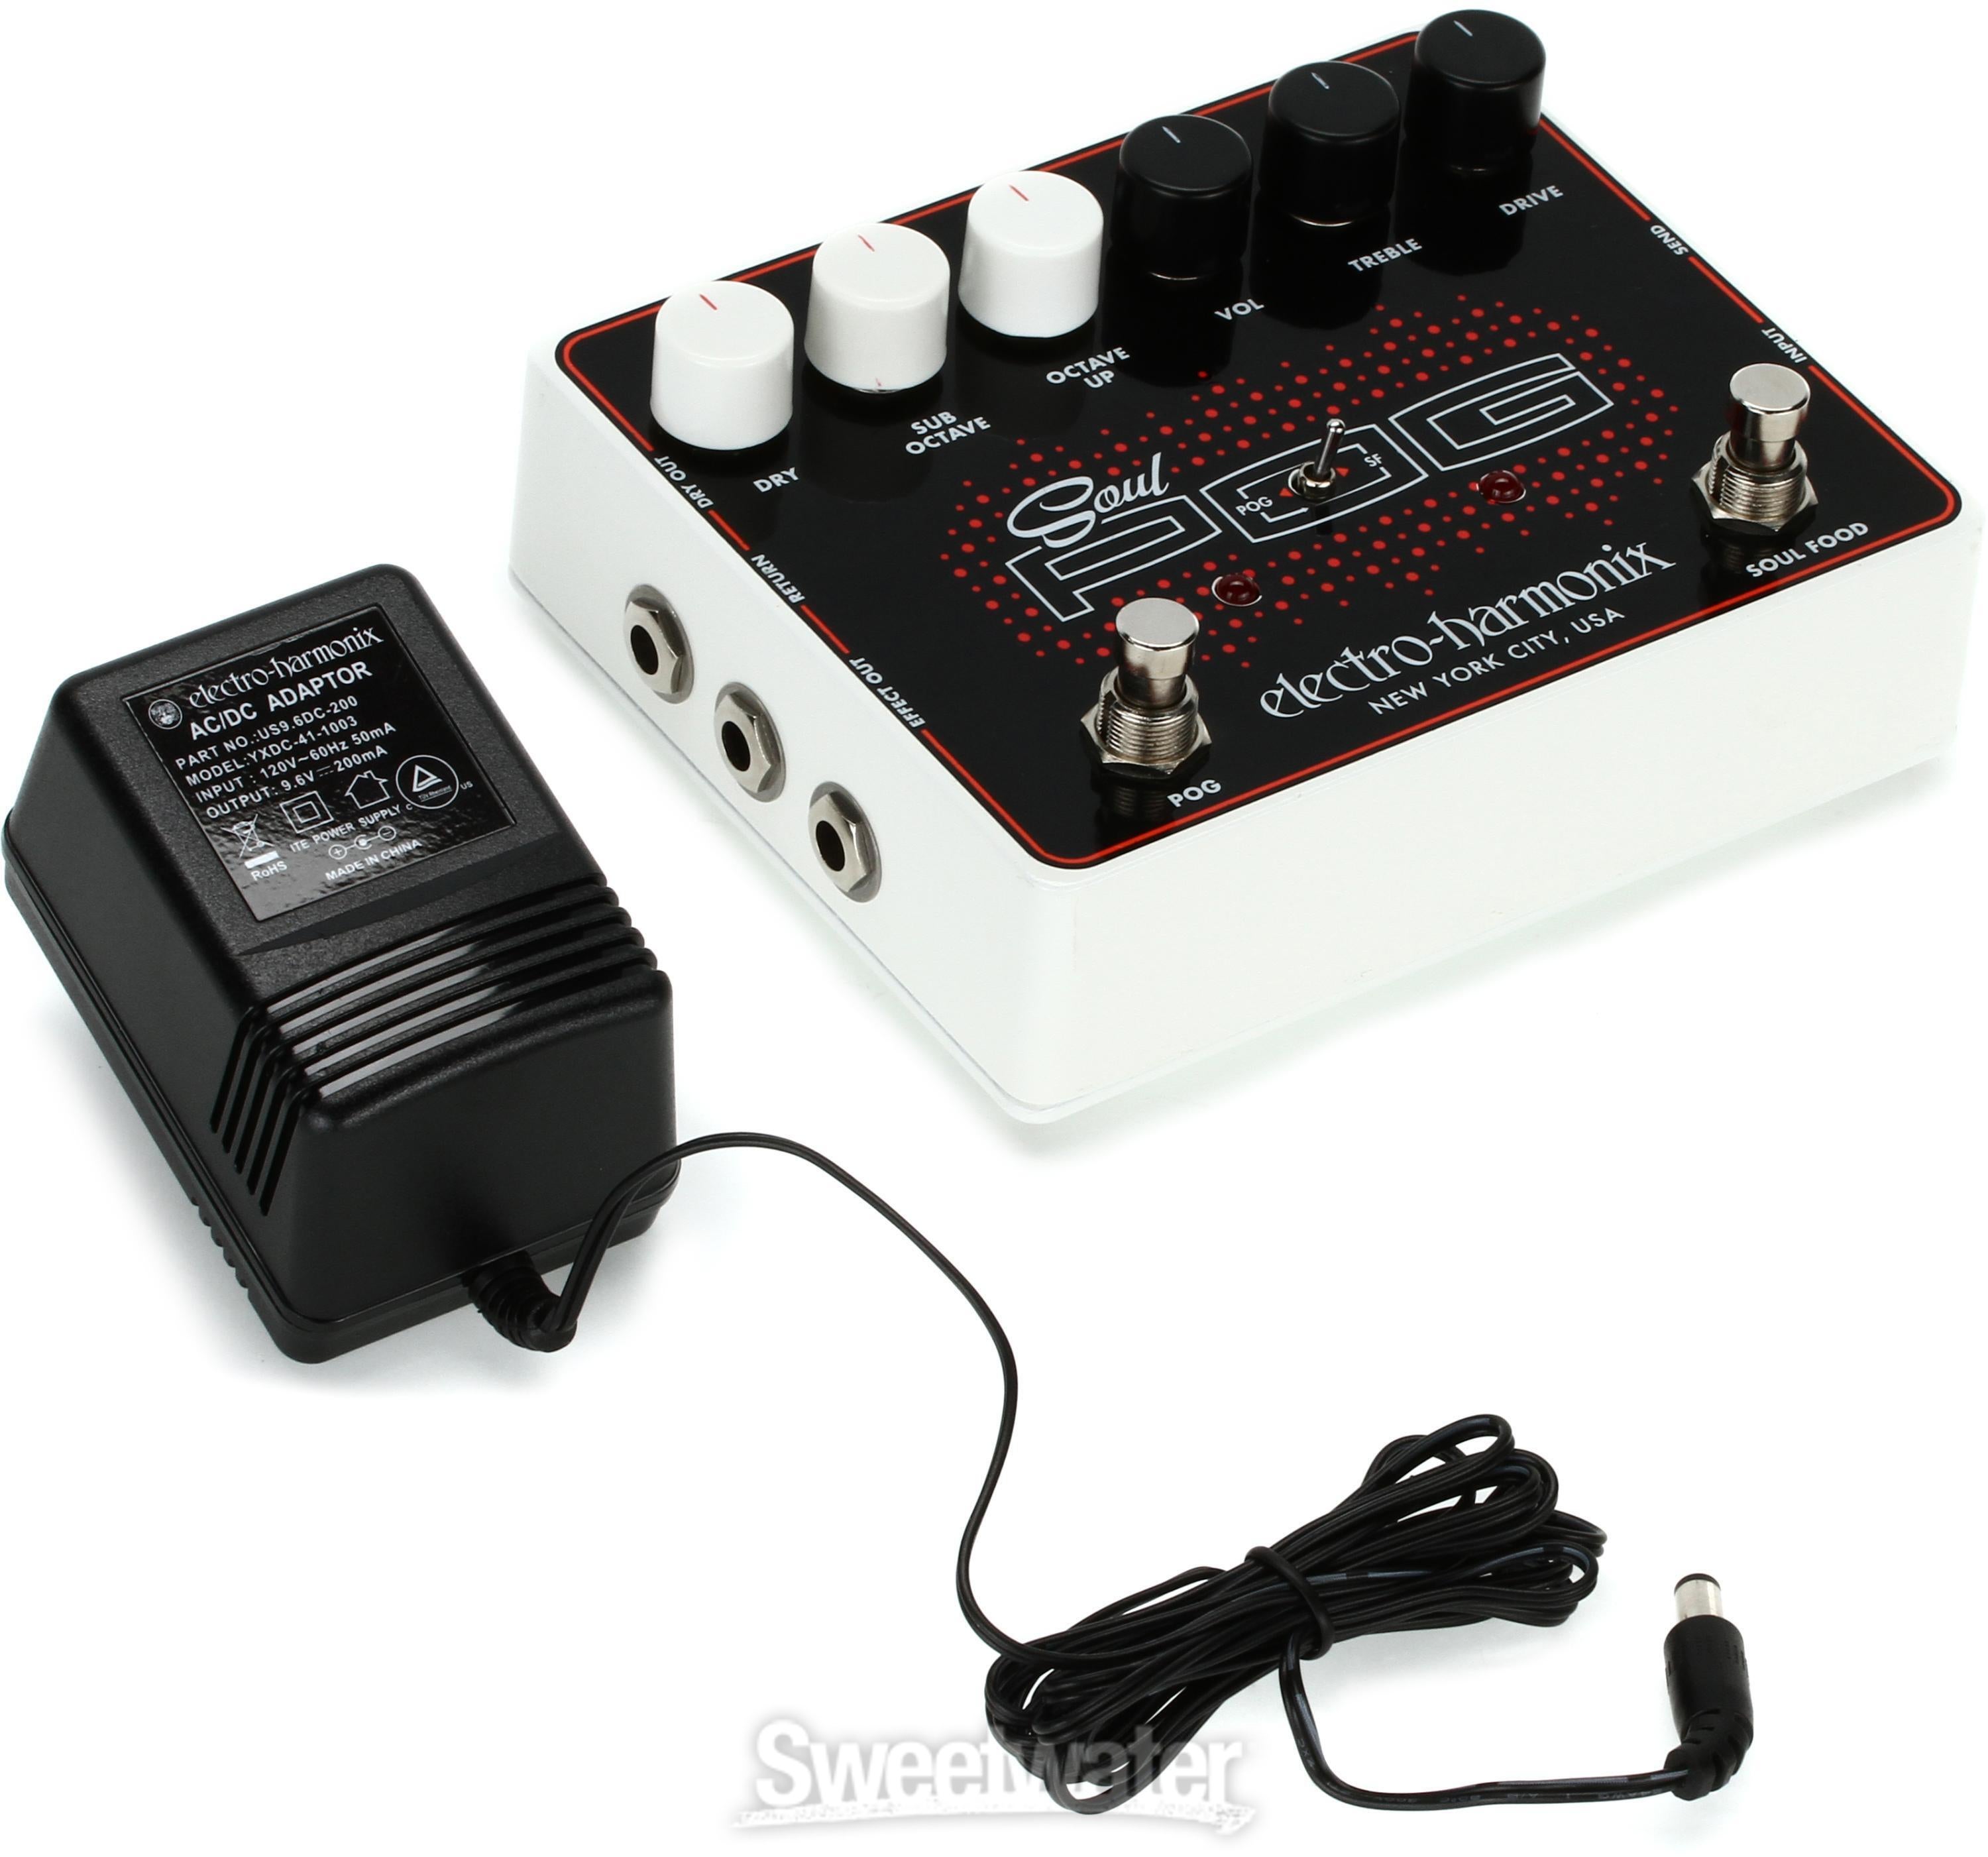 Electro-Harmonix Soul POG Polyphonic Octave Generator and